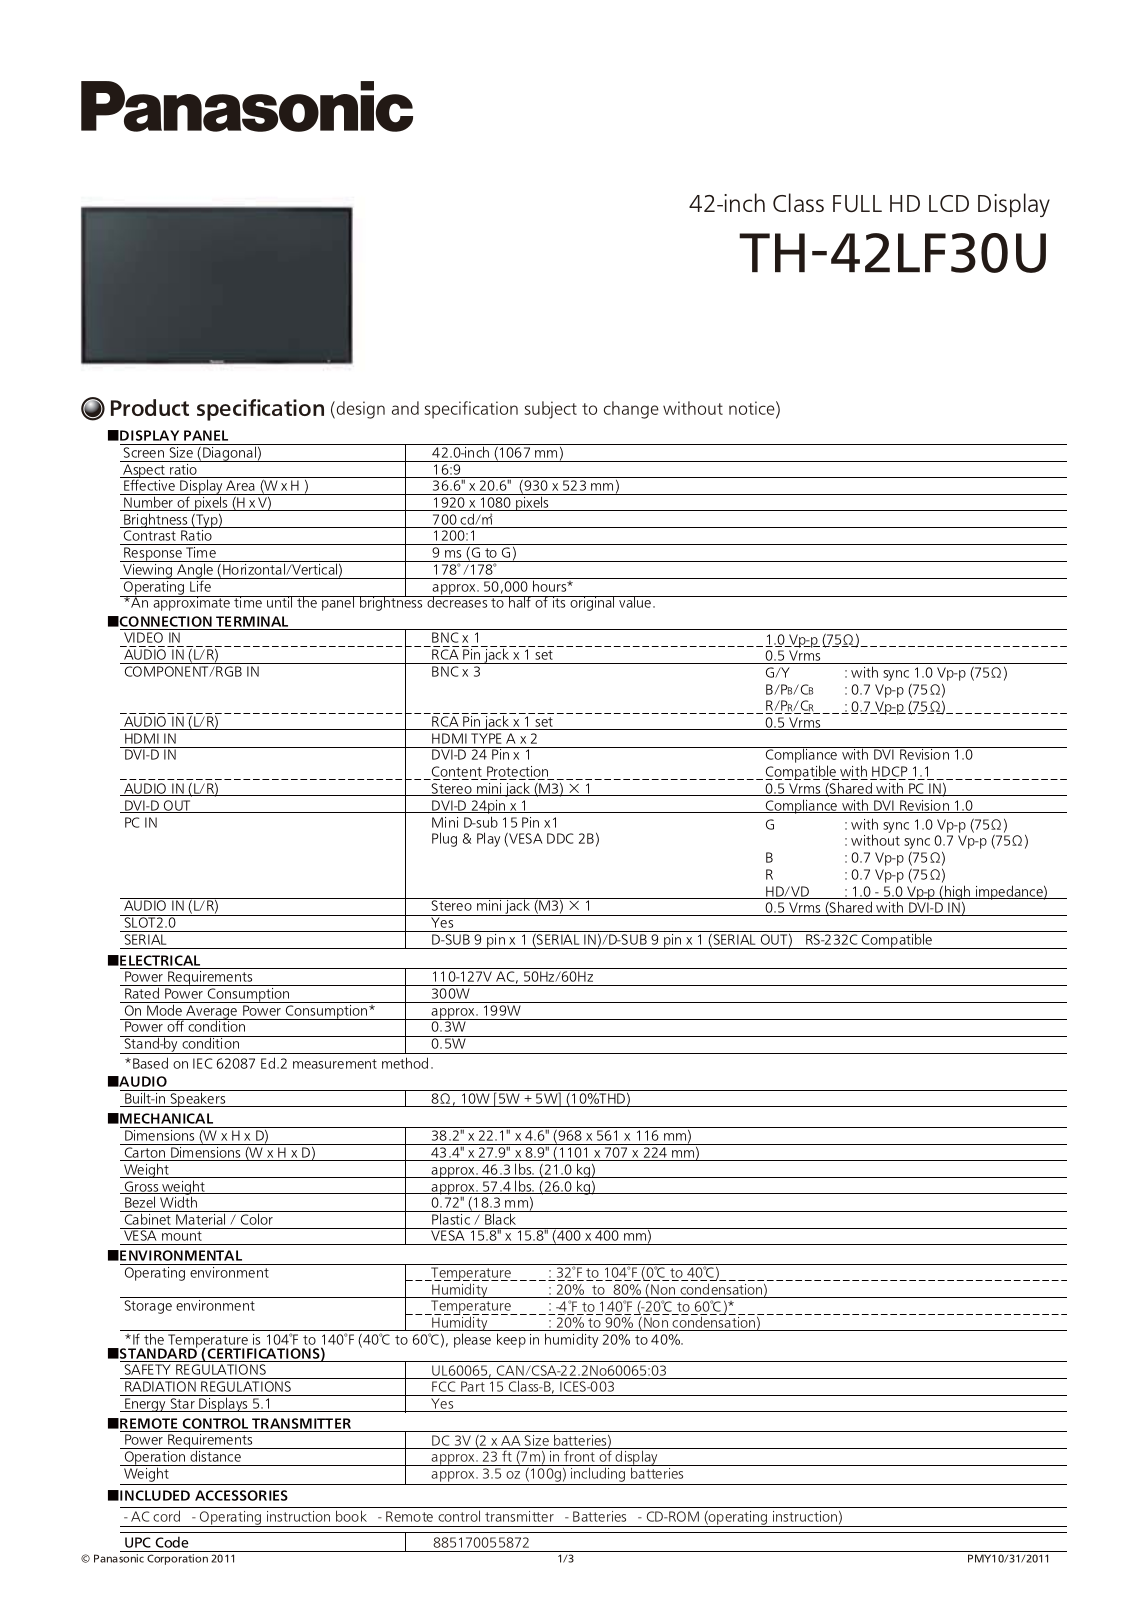 Panasonic TH-42LF30U Specification